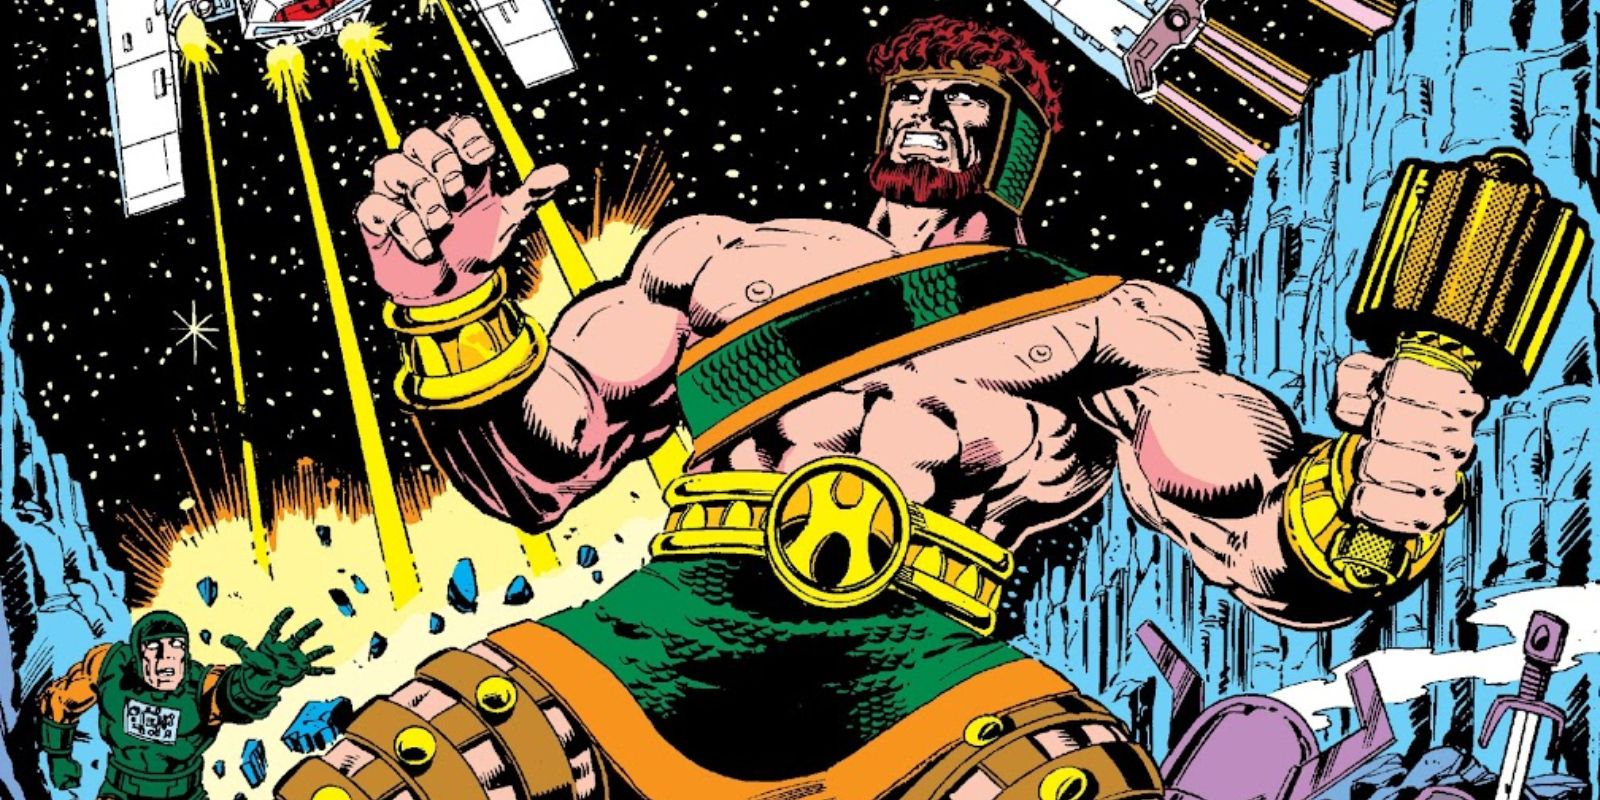 Hercules under attack in Marvel Comics